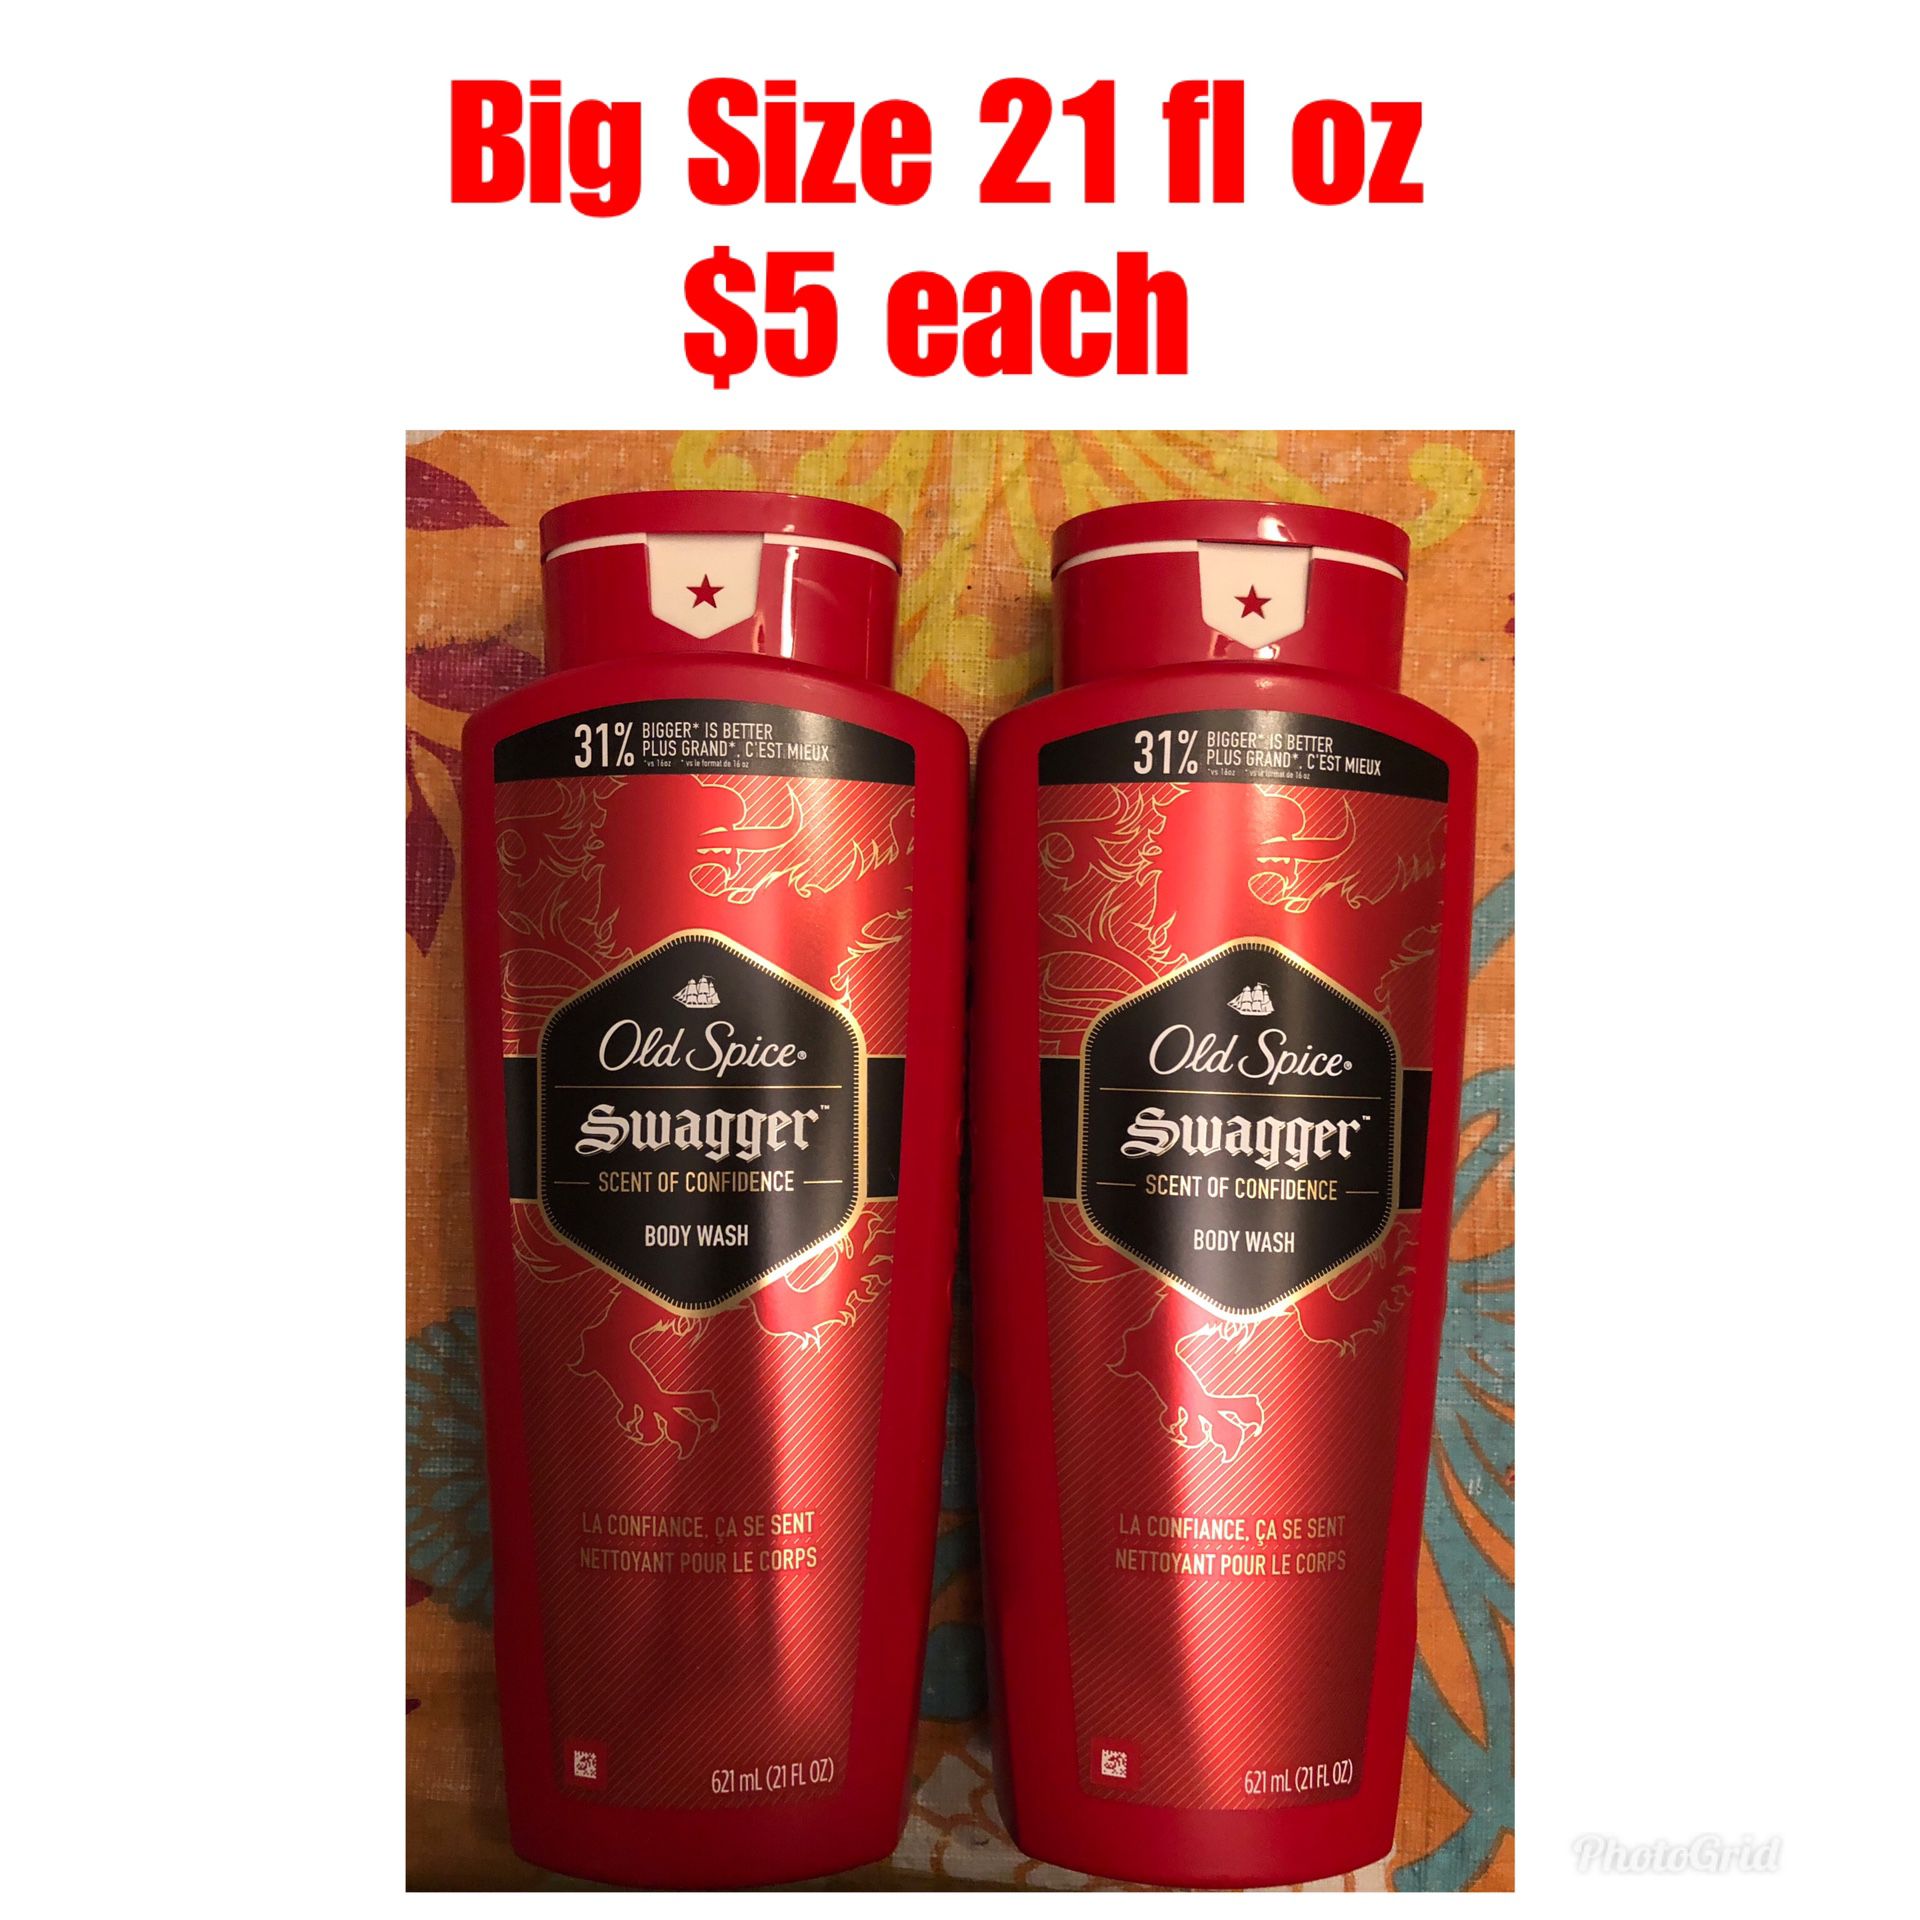 Old Spice Body Wash Big Size 21 fl oz $5 each time r 2 for $9